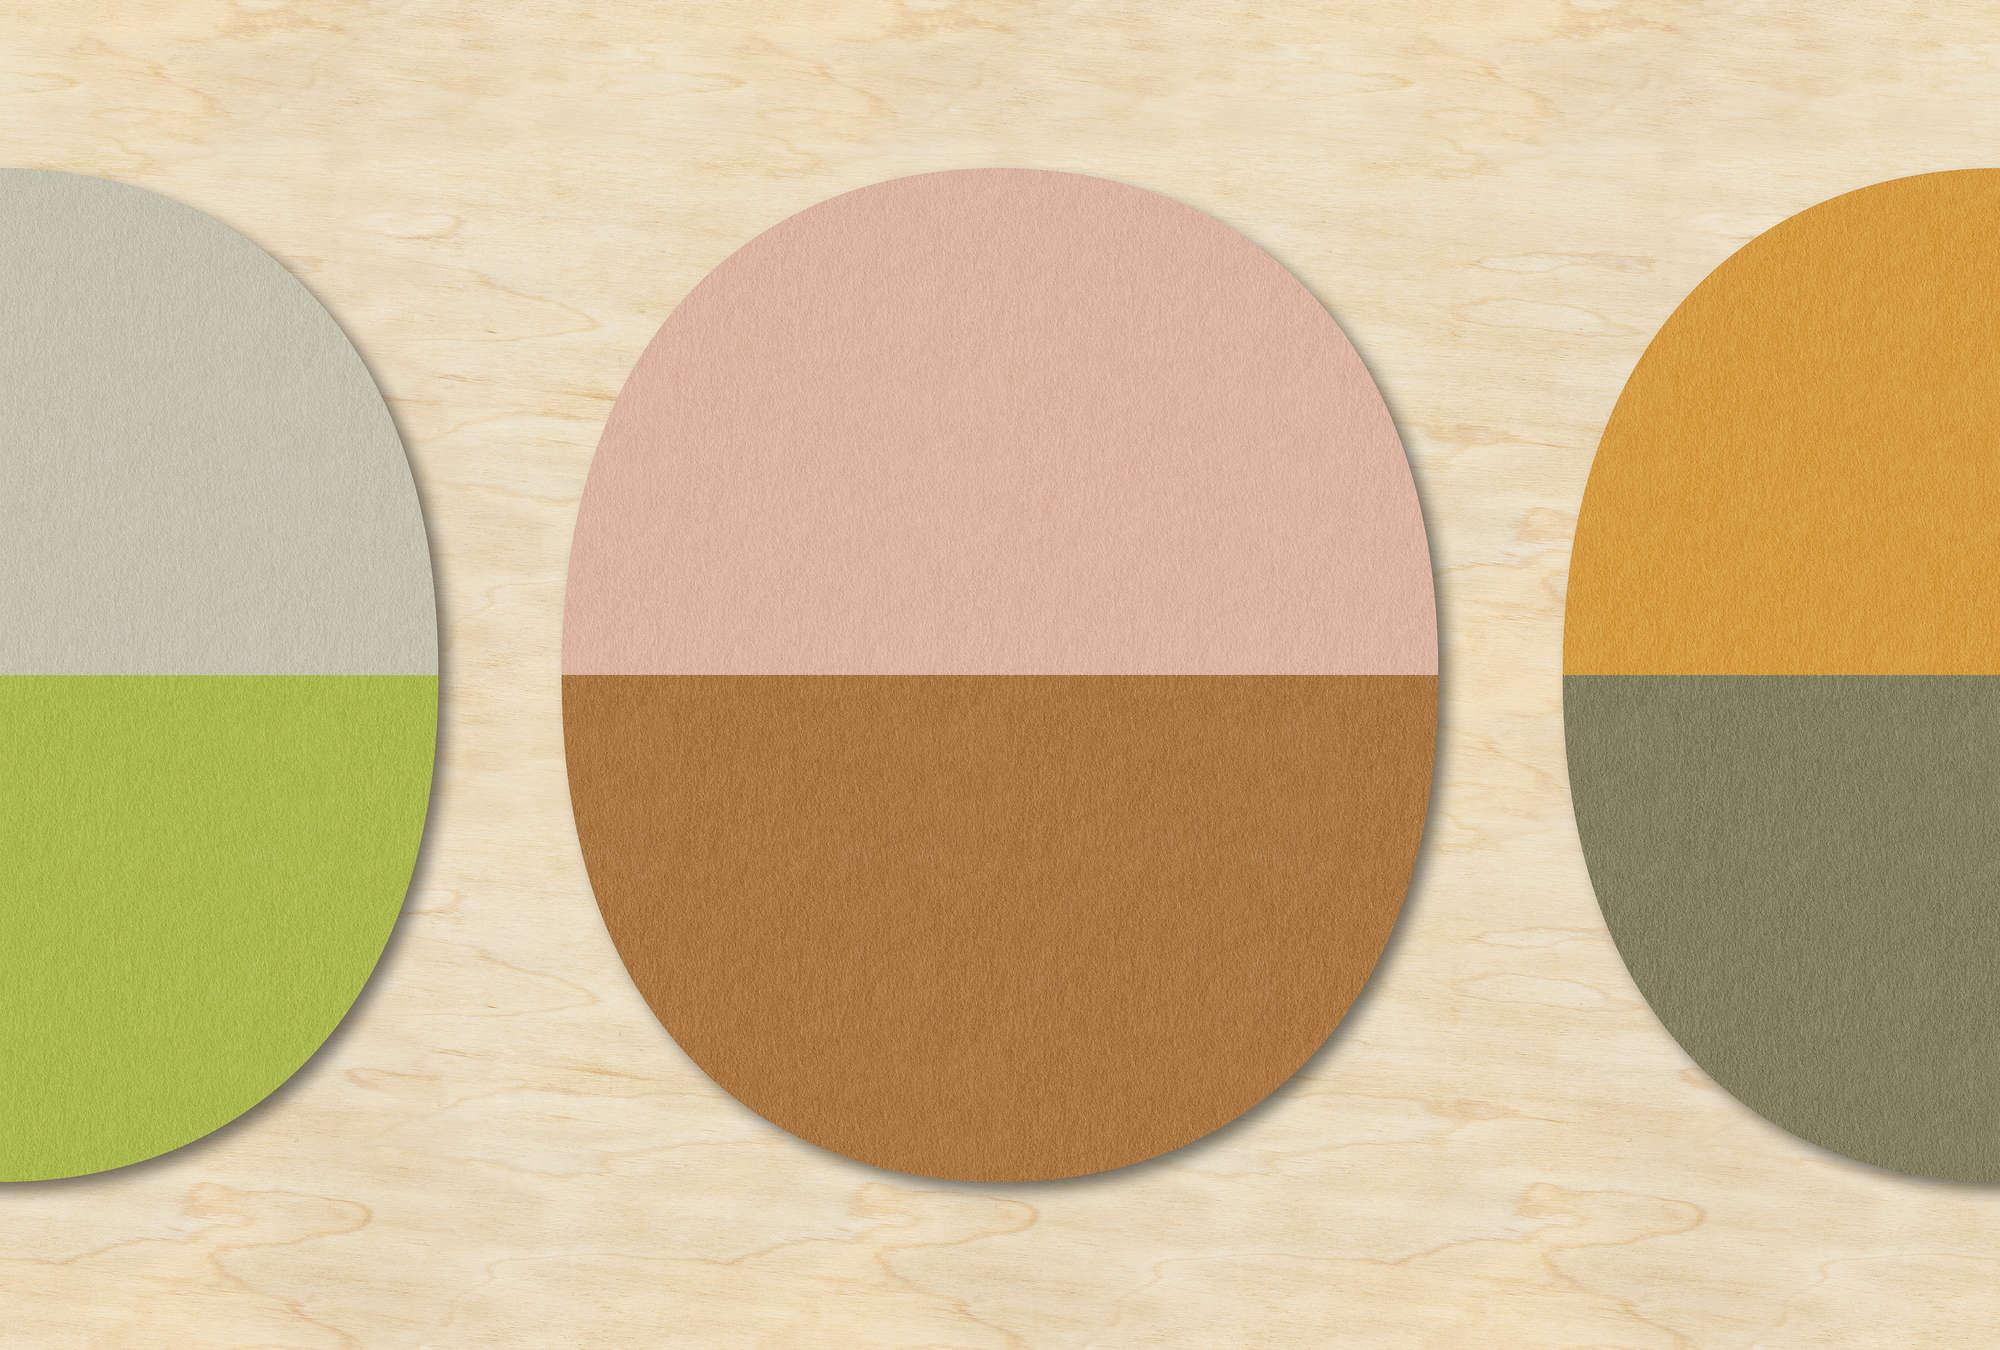             Split ovals 1 - Retro wallpaper colourful design in plywood,felt structure - Beige, Green | Matt smooth fleece
        